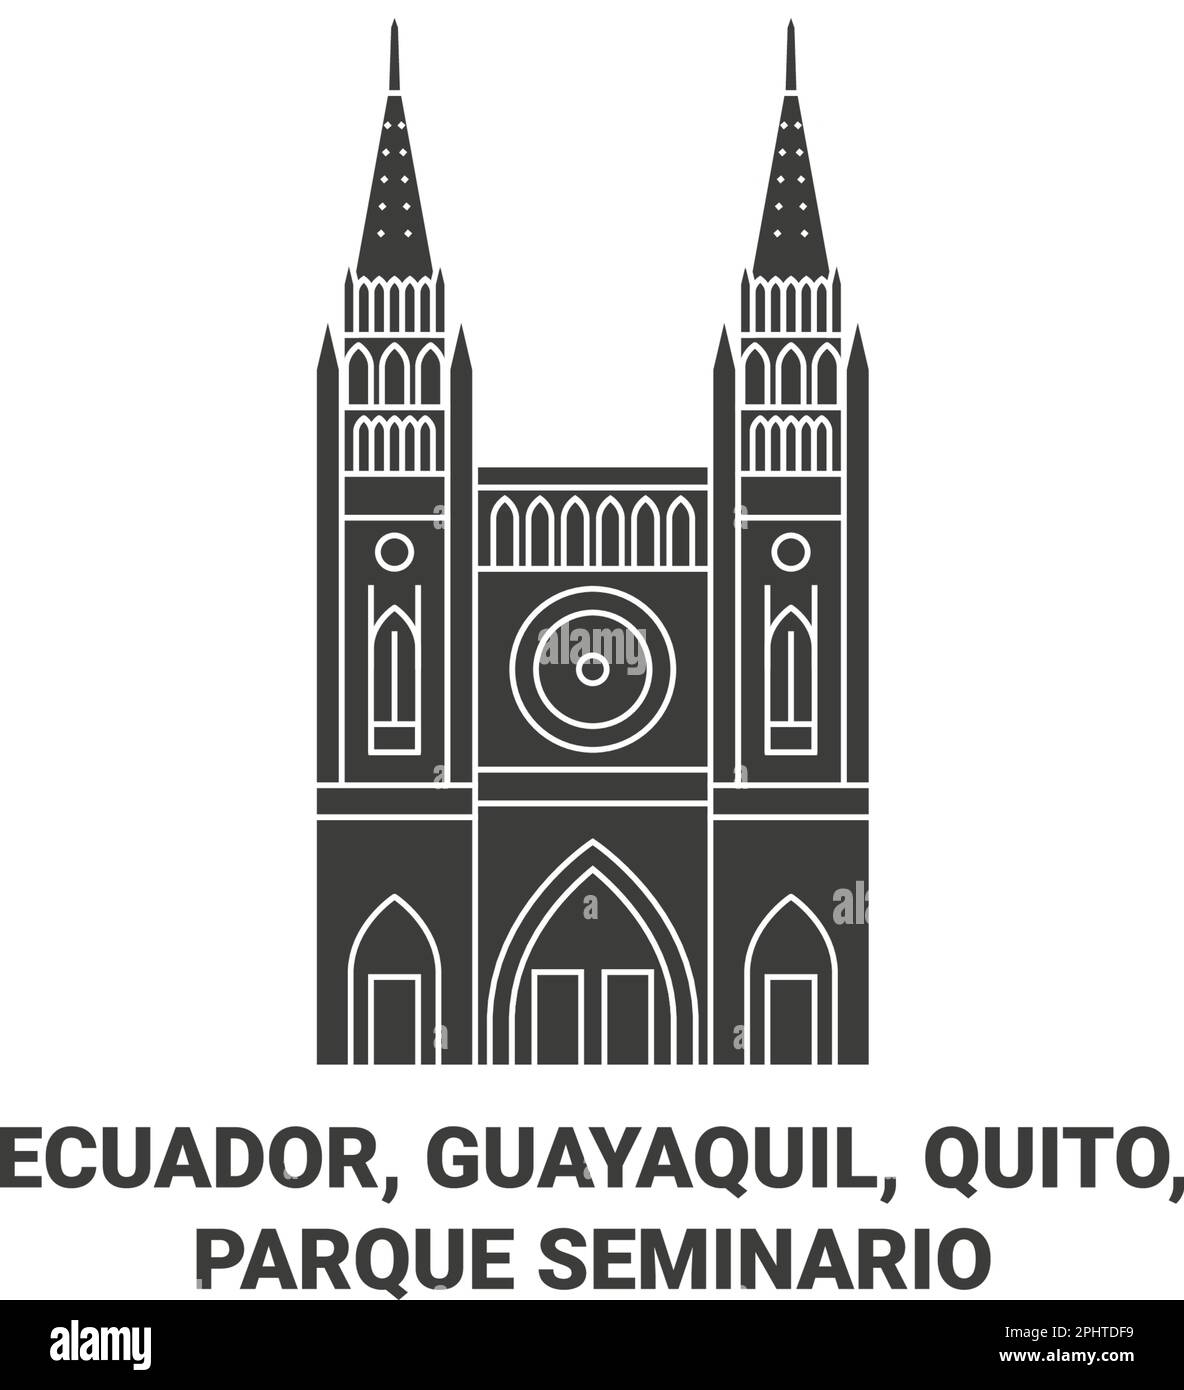 Ecuador, Guayaquil, Quito, Parque Seminario travel landmark vector illustration Stock Vector